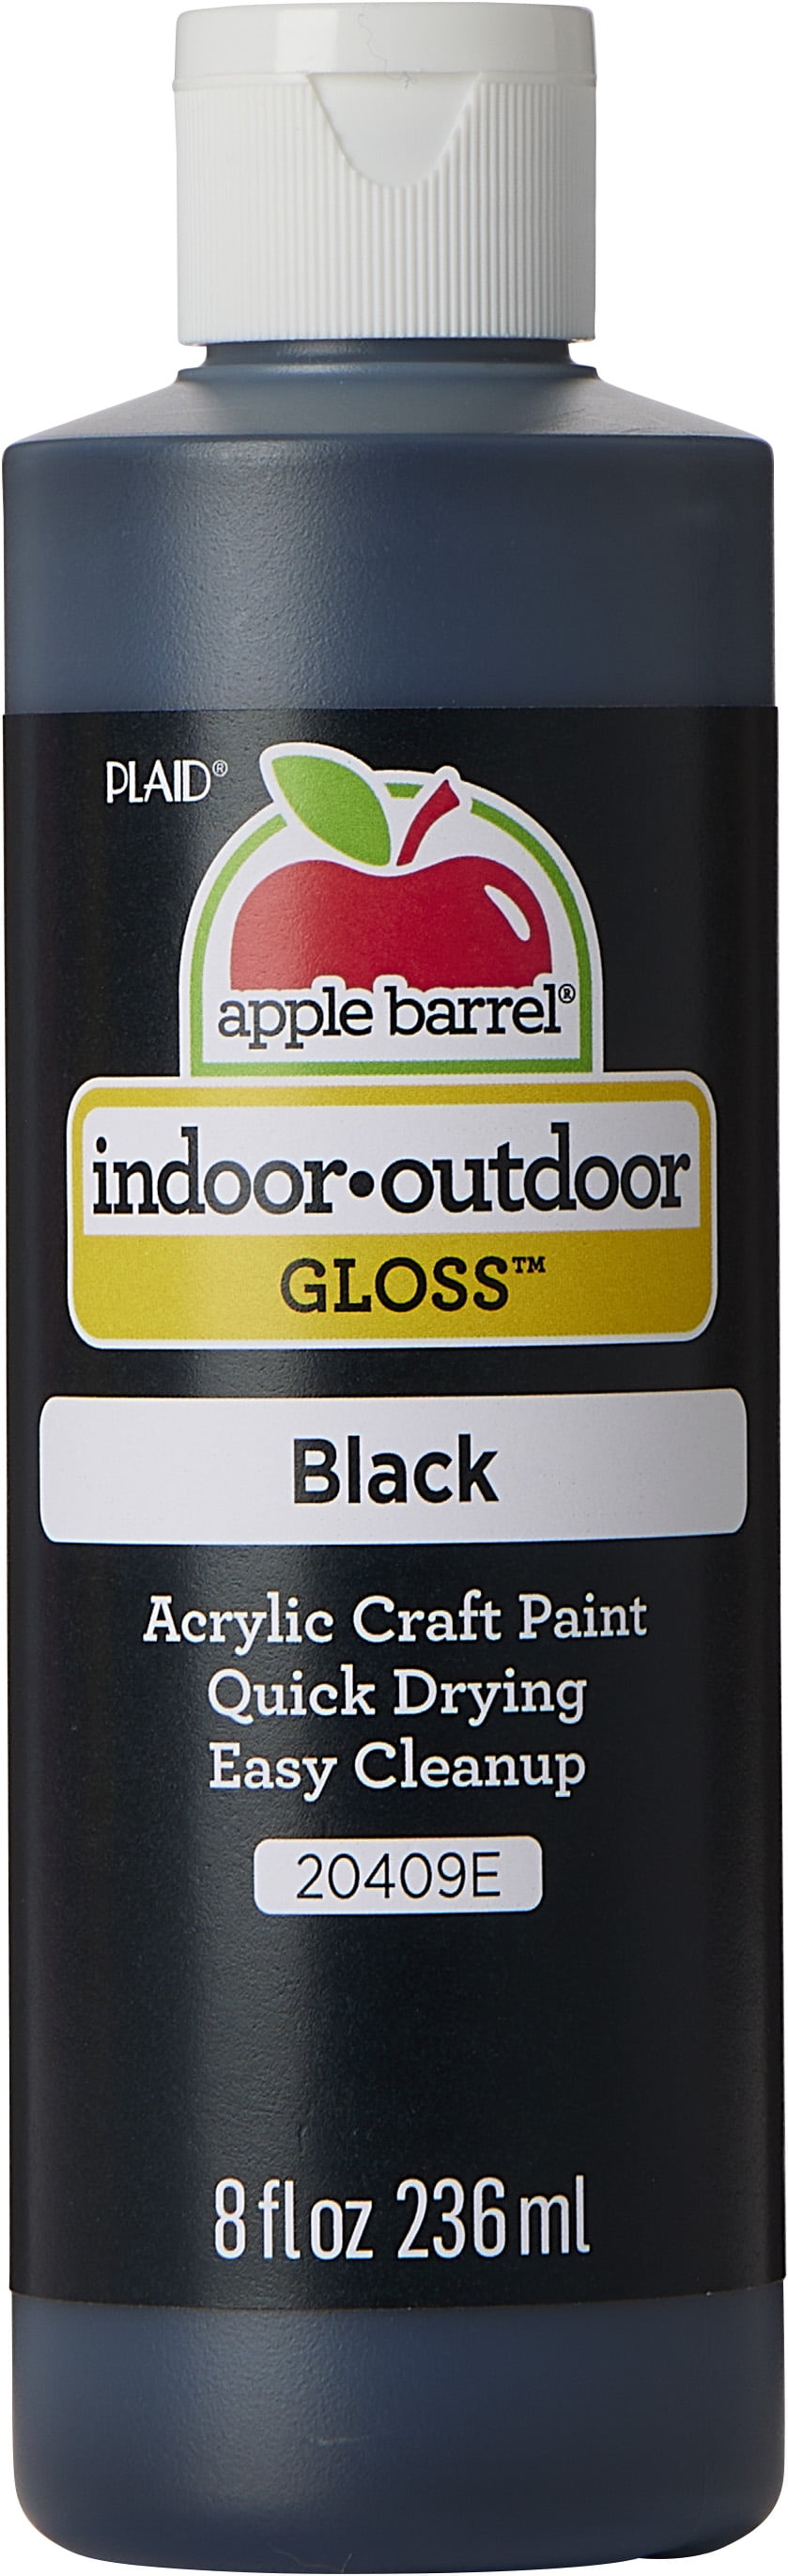 Apple Barrel, Acrylic Craft Paint, Gloss Finish, Black, 8 fl oz